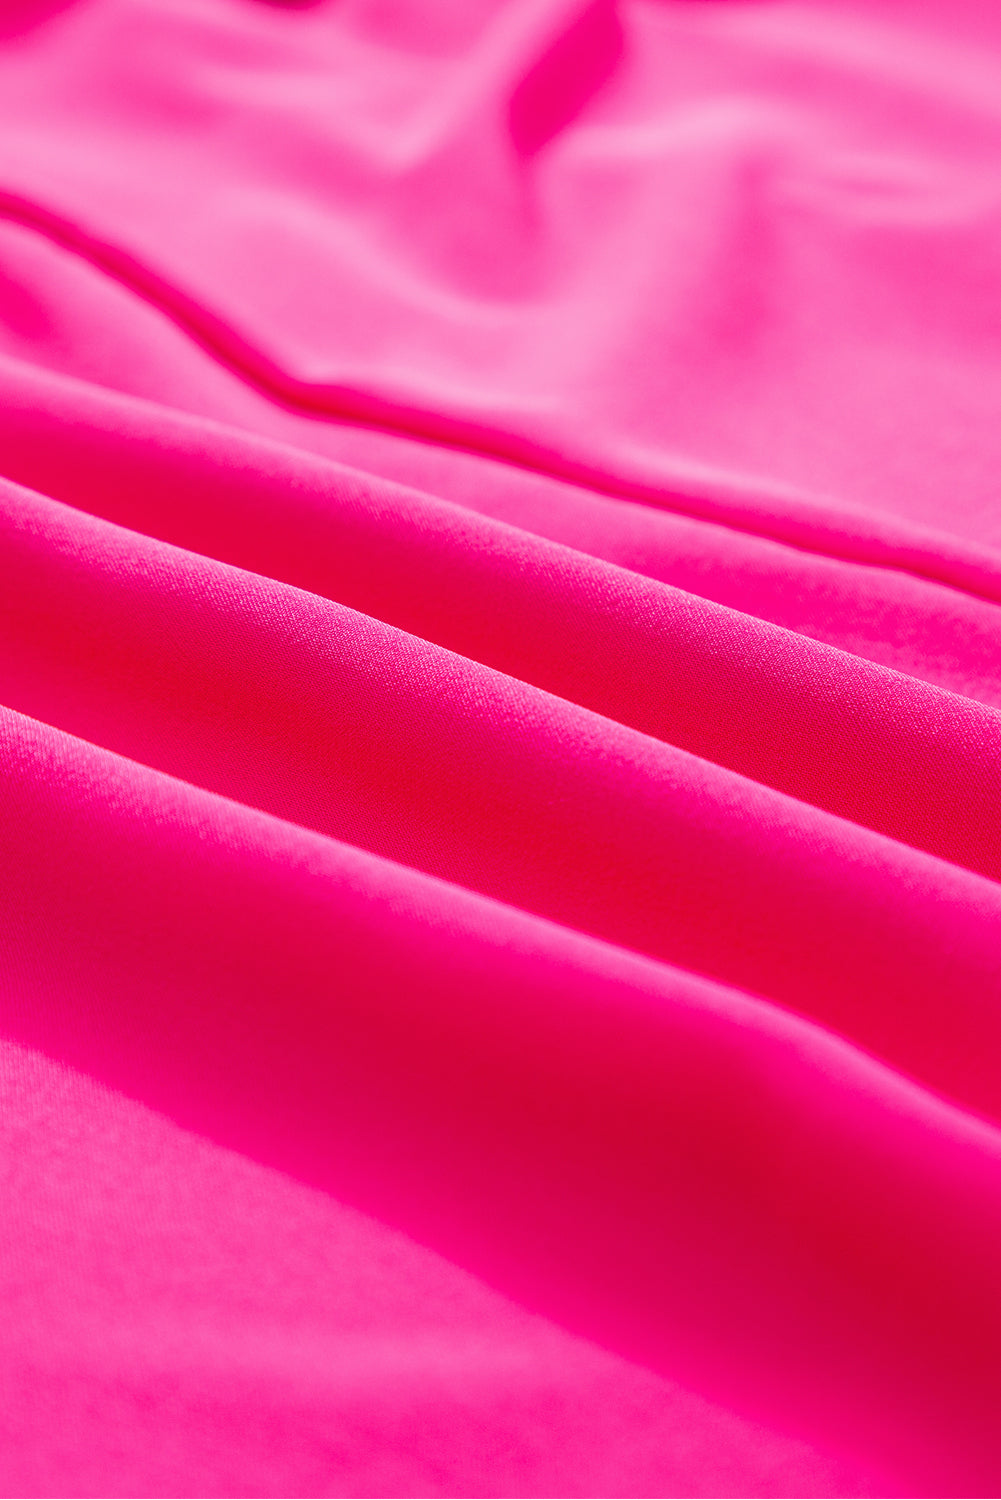 Rose Bubble Sleeve Shirt Maxi Dress - SELFTRITSS